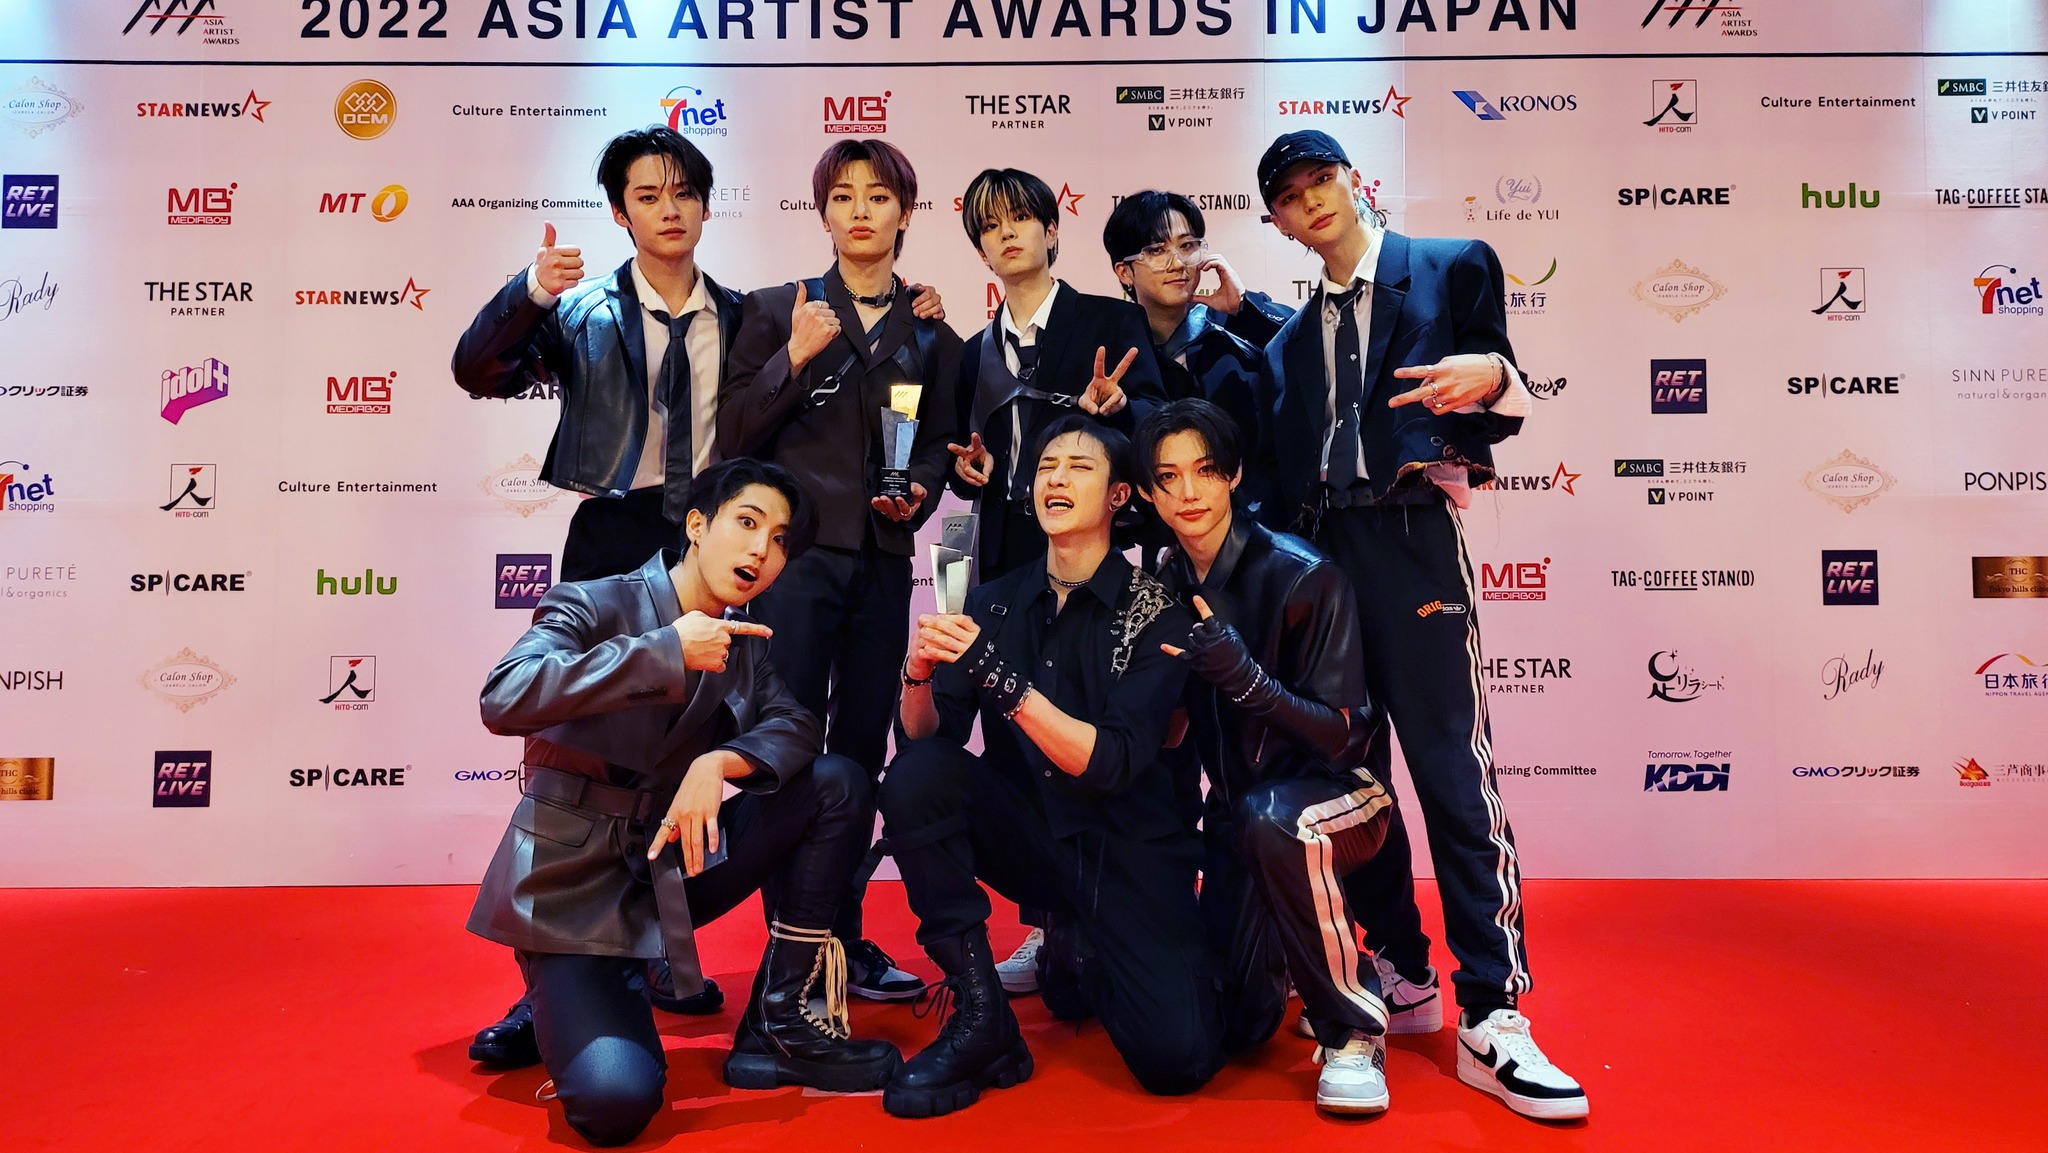 Asia Artist Awards 2022